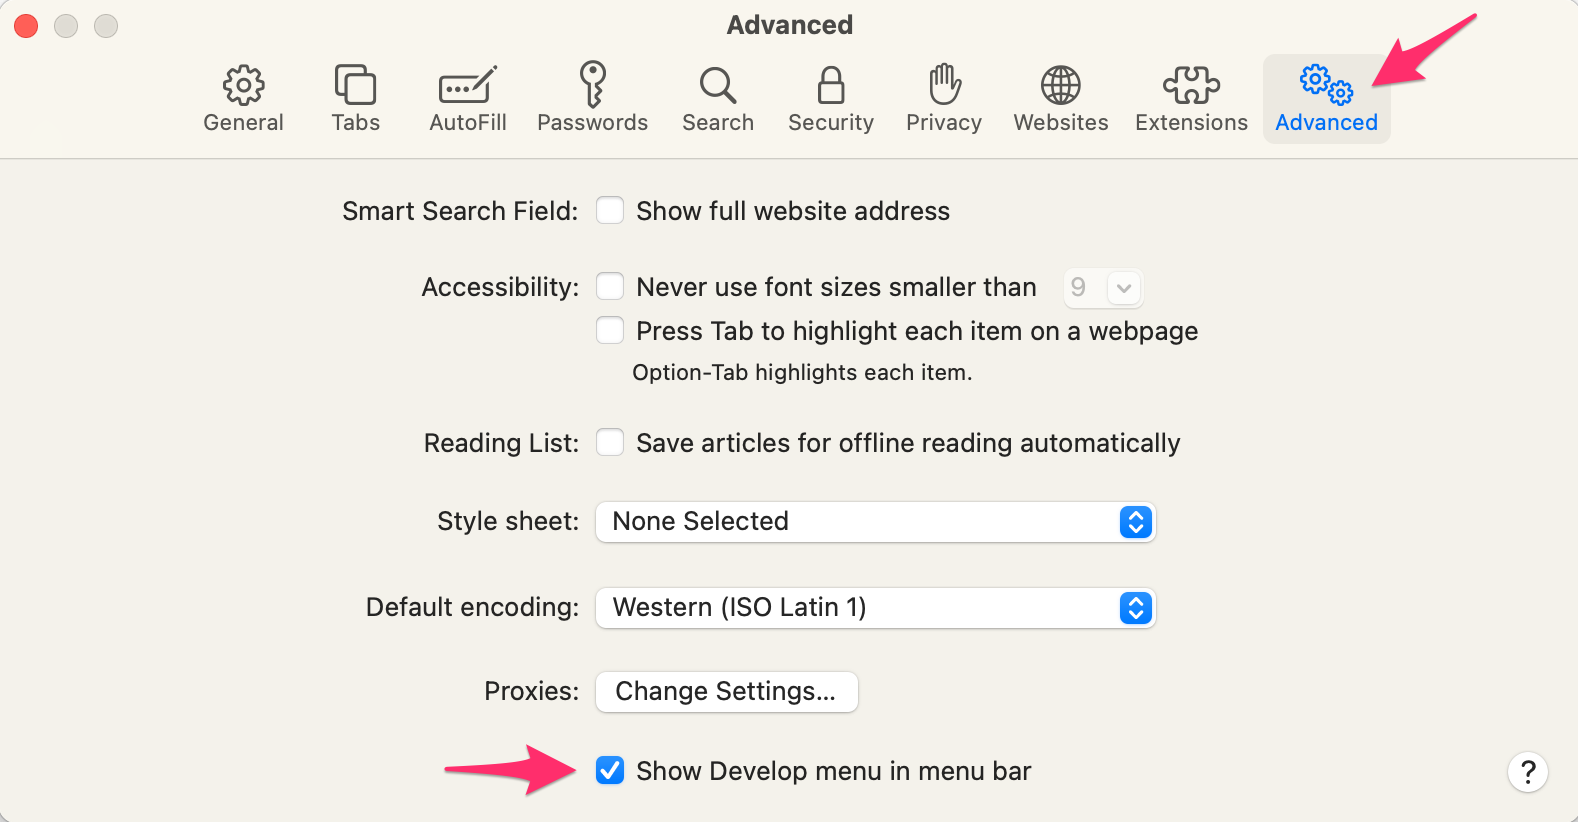 Select Show Develop menu in menu bar in the Advanced section